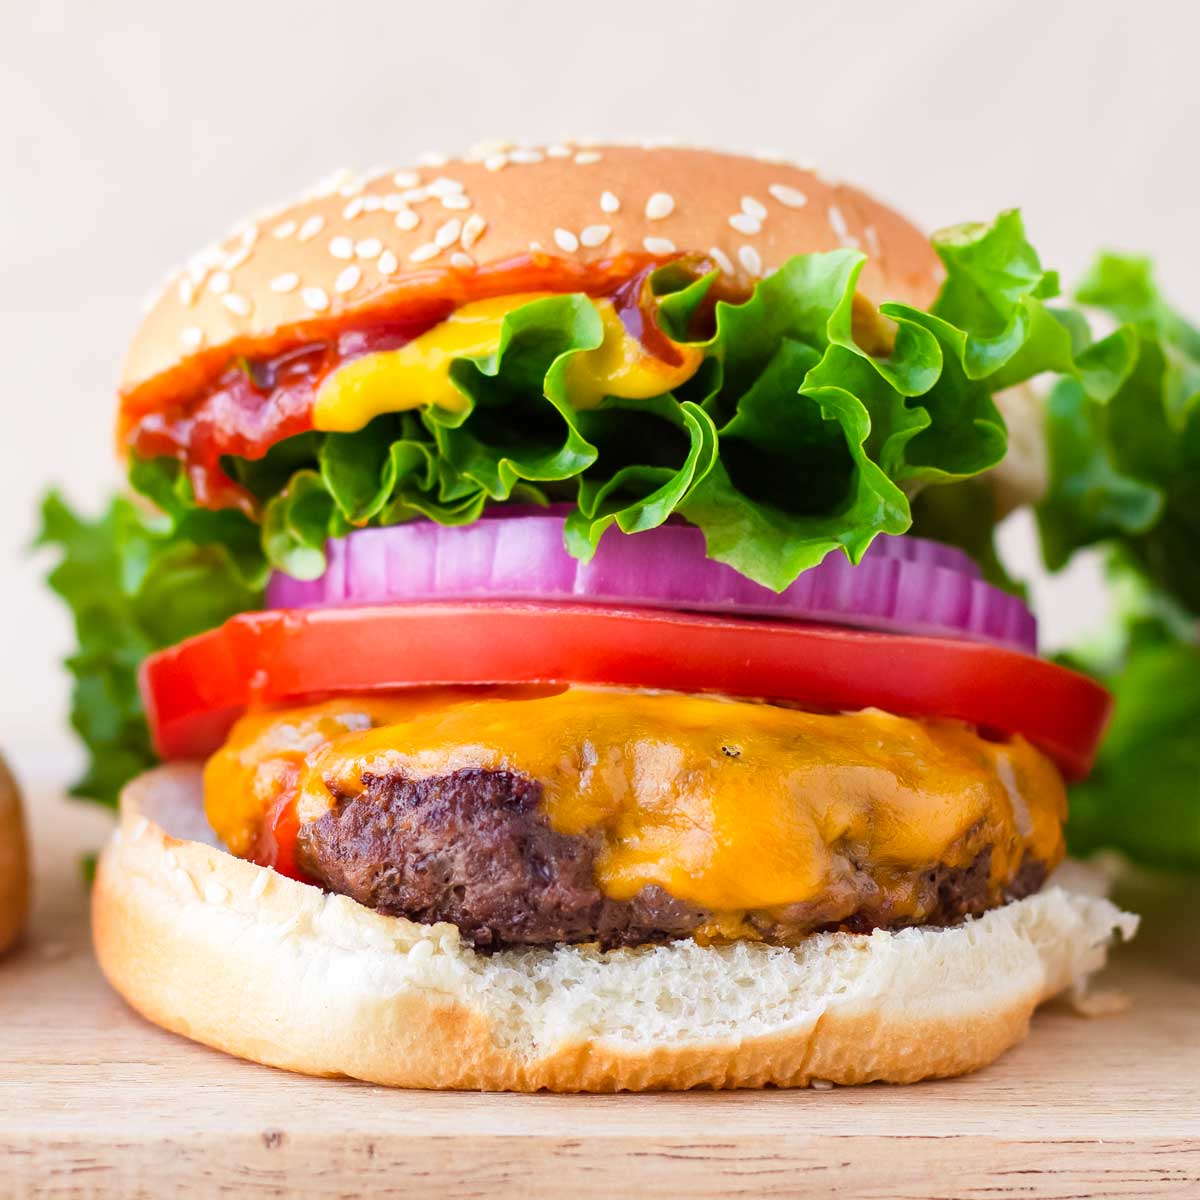 https://cookingformysoul.com/wp-content/uploads/2021/07/all-american-burger-featured2-min.jpg